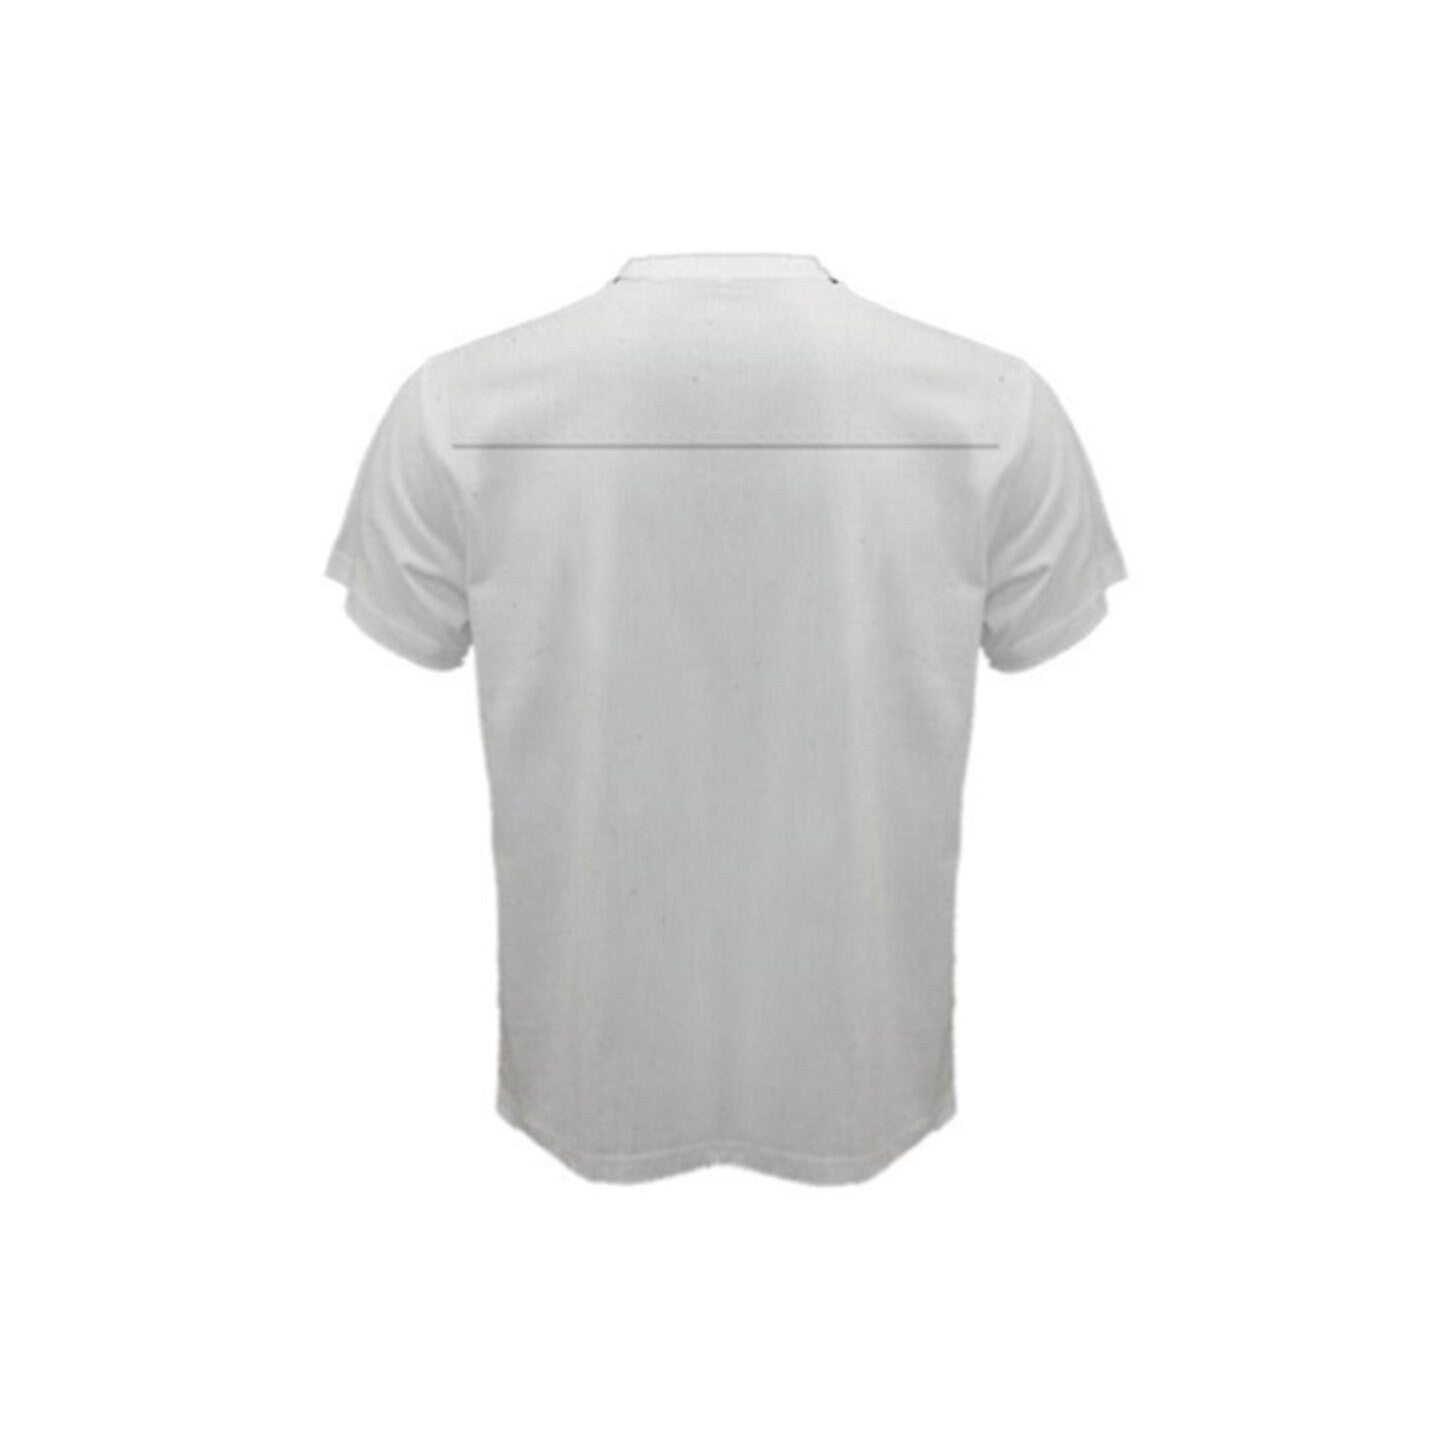 Men's Chef Ratatouille Inspired Shirt